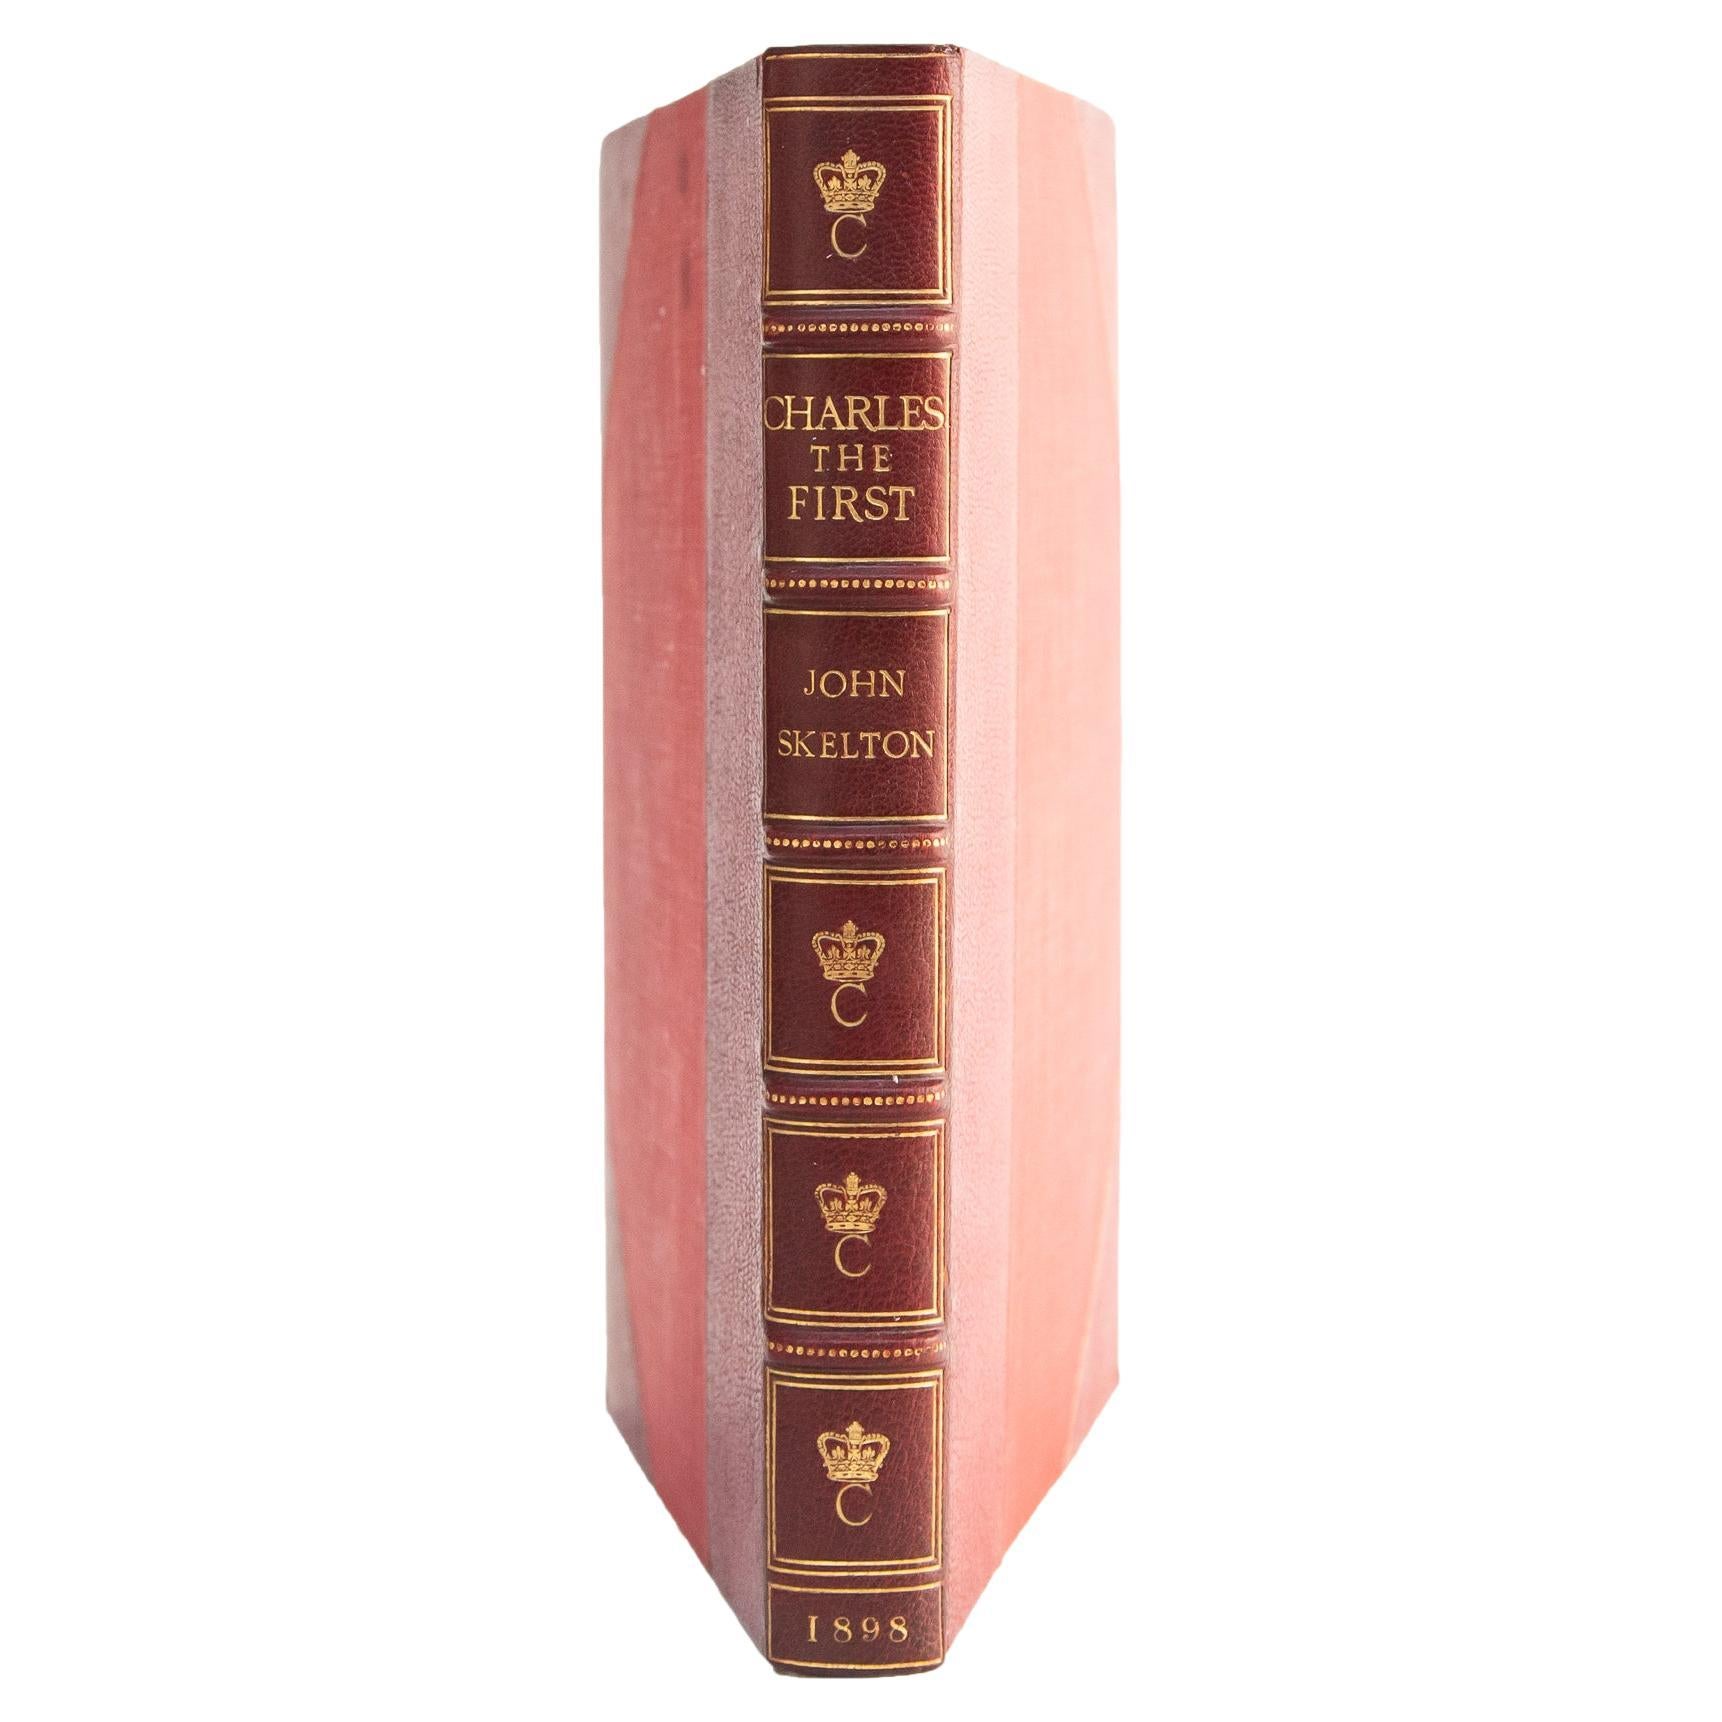 1 Volume, Sir John Skelton, Charles I. For Sale